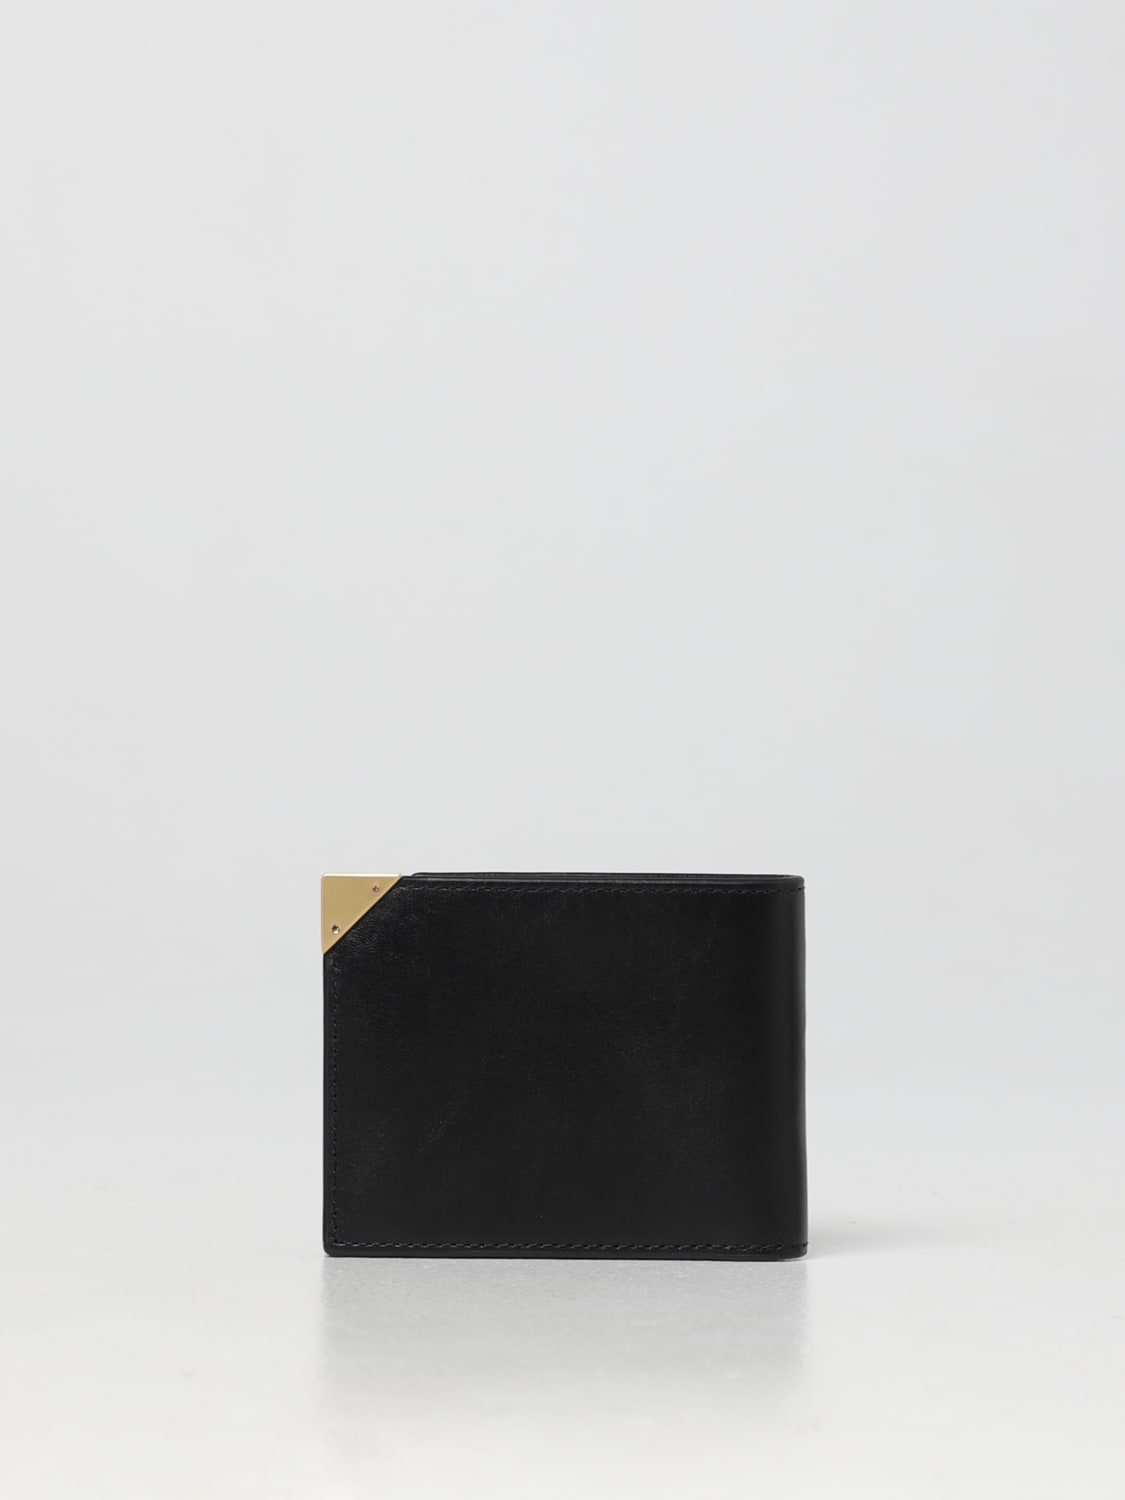 Calvin Klein - Wallet